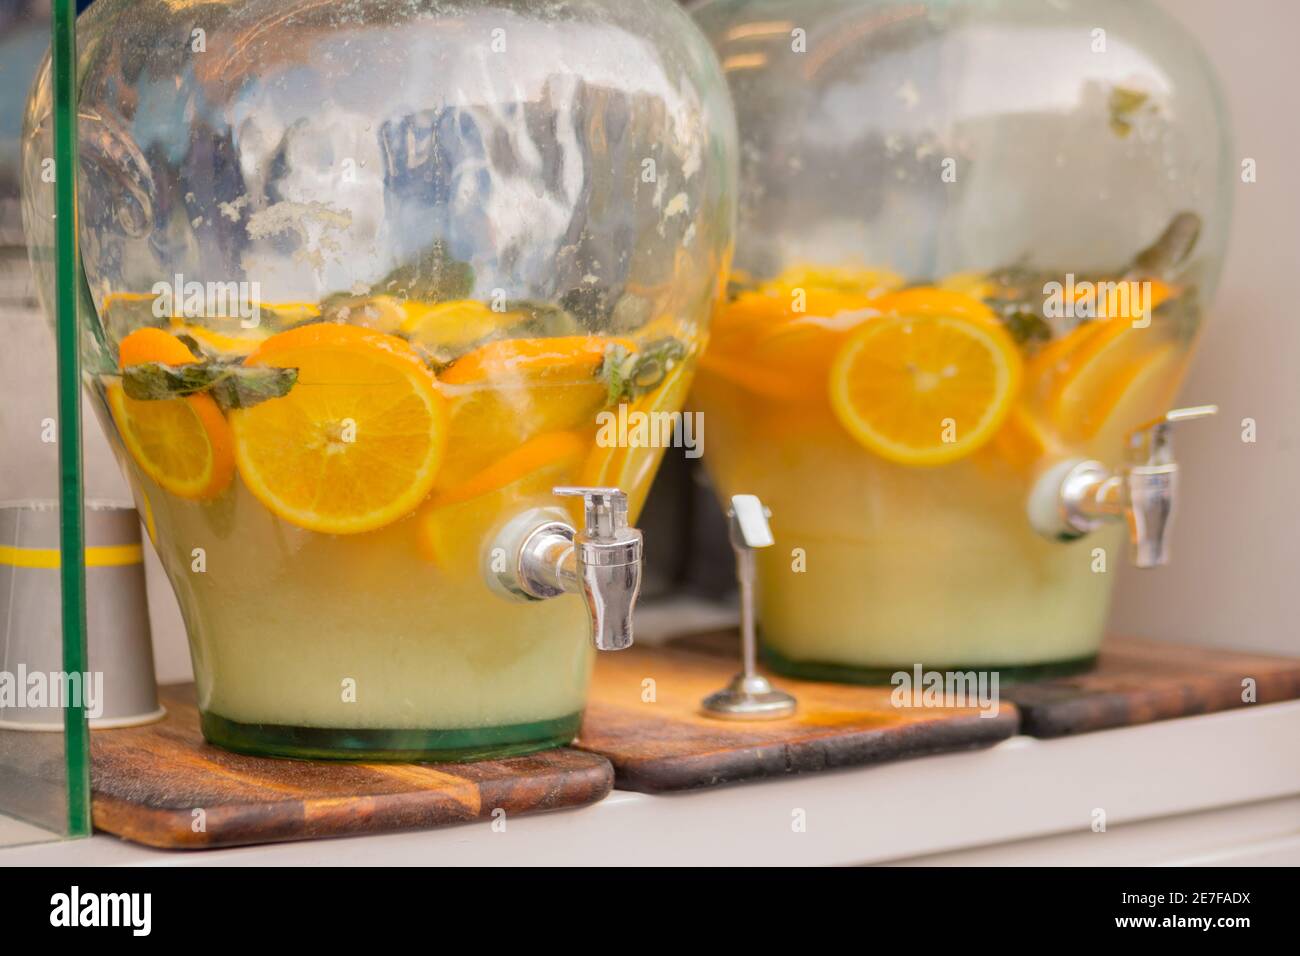 https://c8.alamy.com/comp/2E7FADX/vintage-pitcher-of-homemade-lemonade-mojito-with-mint-and-orange-slices-2E7FADX.jpg